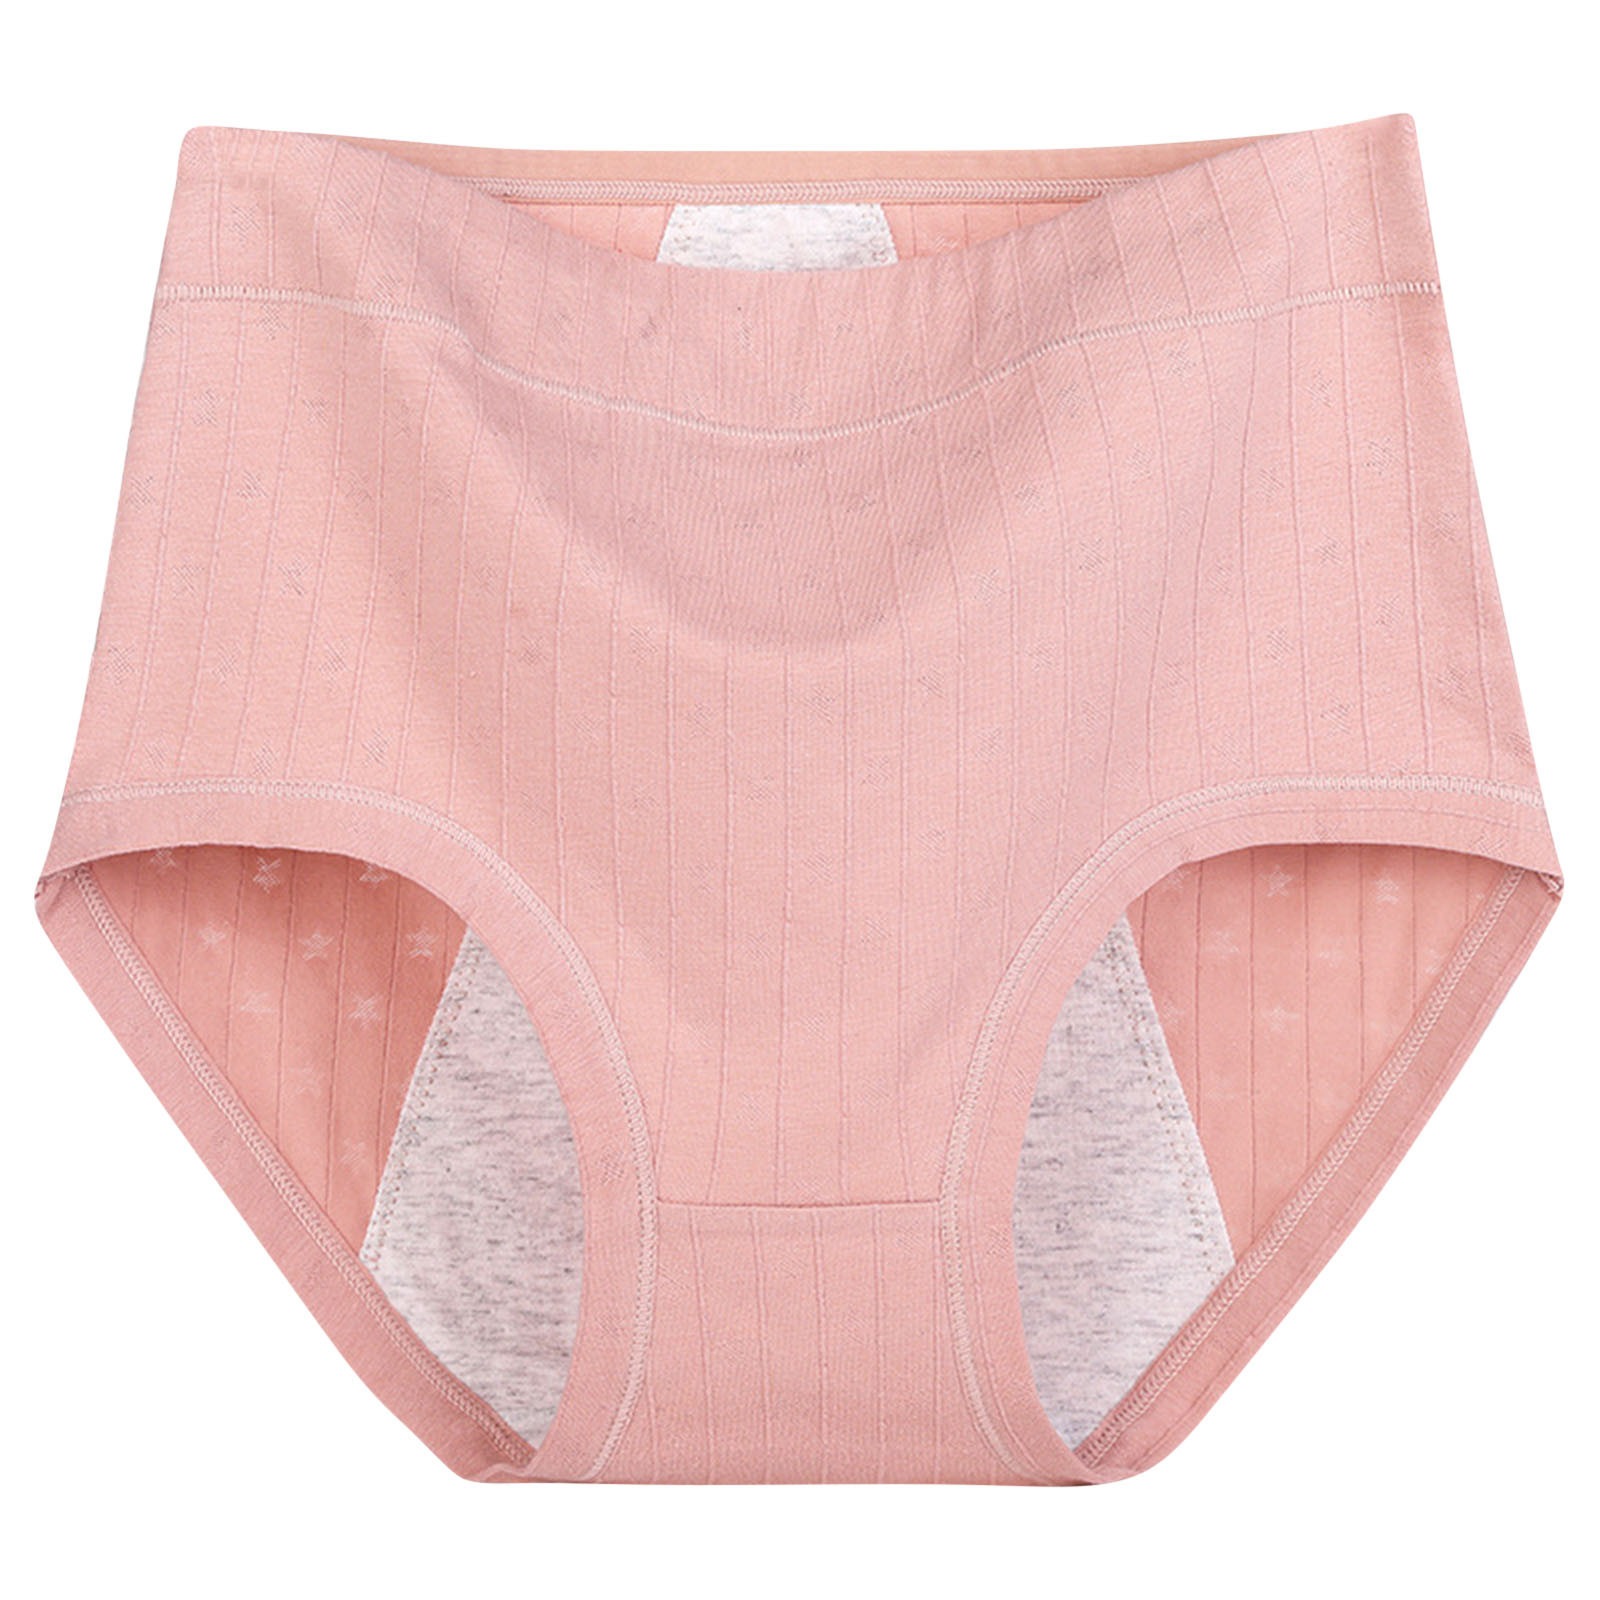 Plus Size Underwear for Women Incontinence Leakproof Panties Postpartum ...